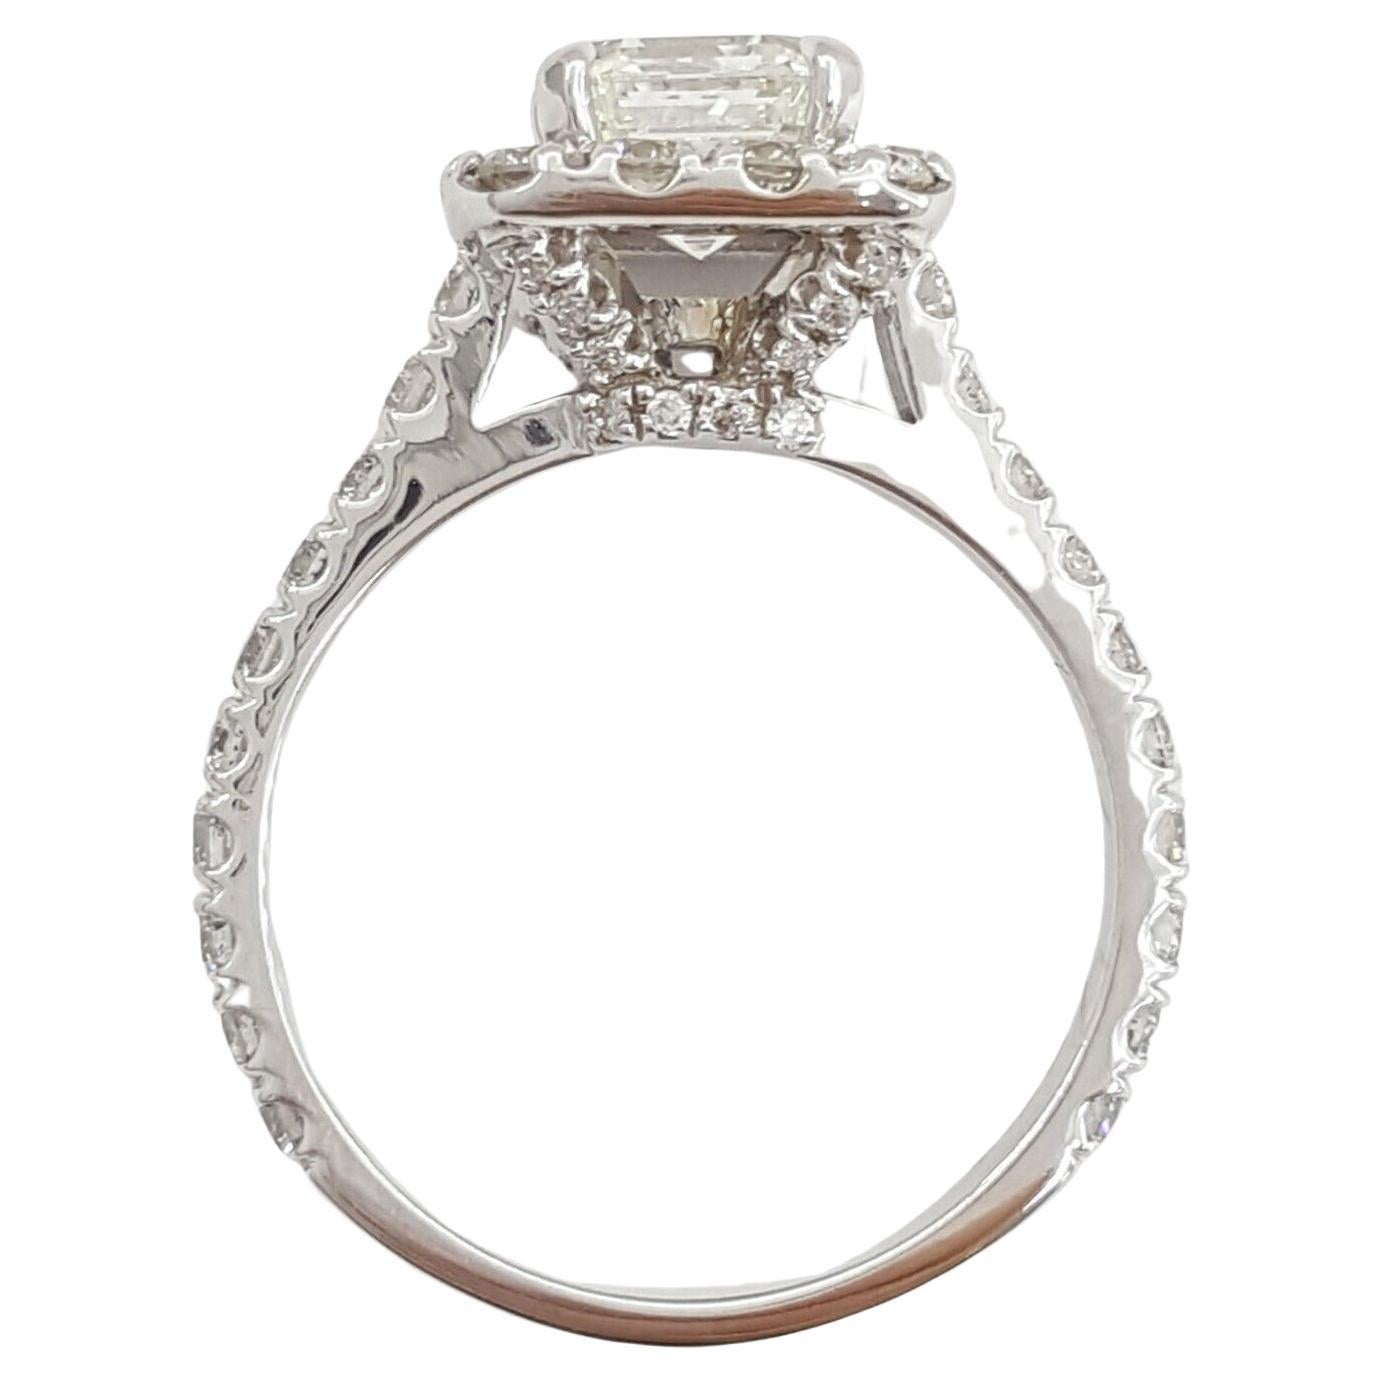 2.56 ct total weight Asscher Cut Halo Diamond Engagement Ring. 


